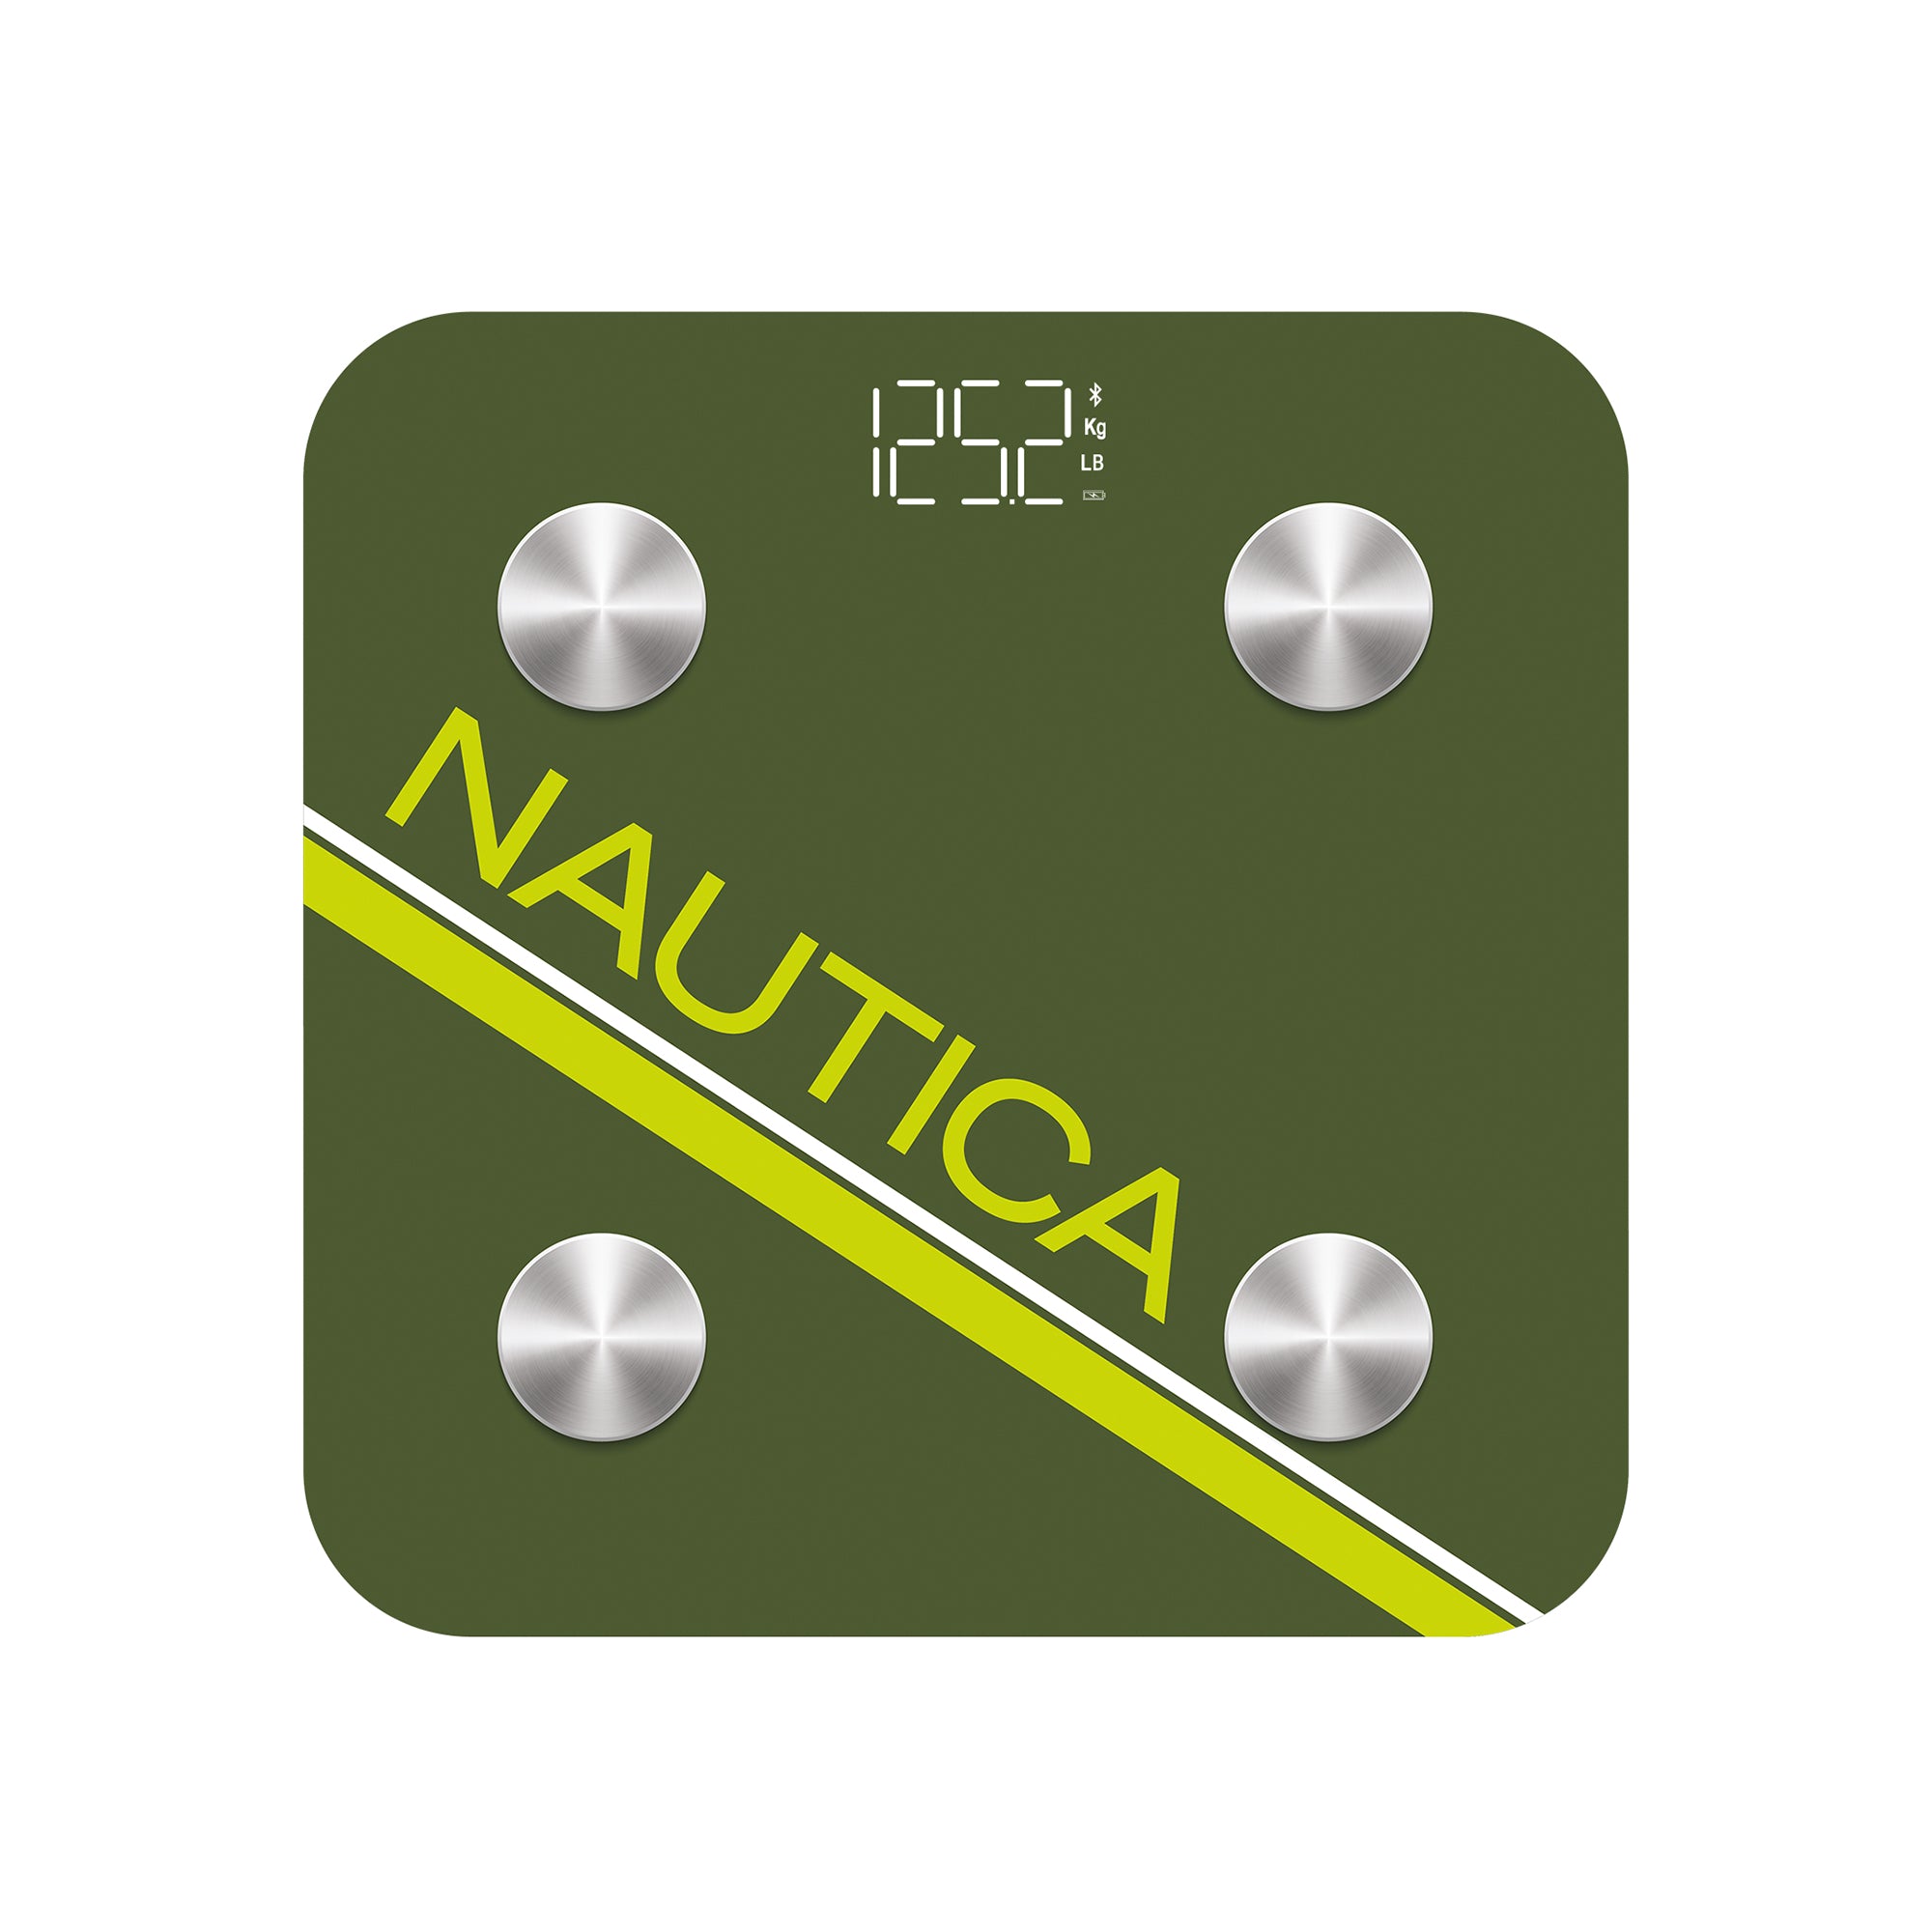 Nautica Smart Body Scale Body Tracker